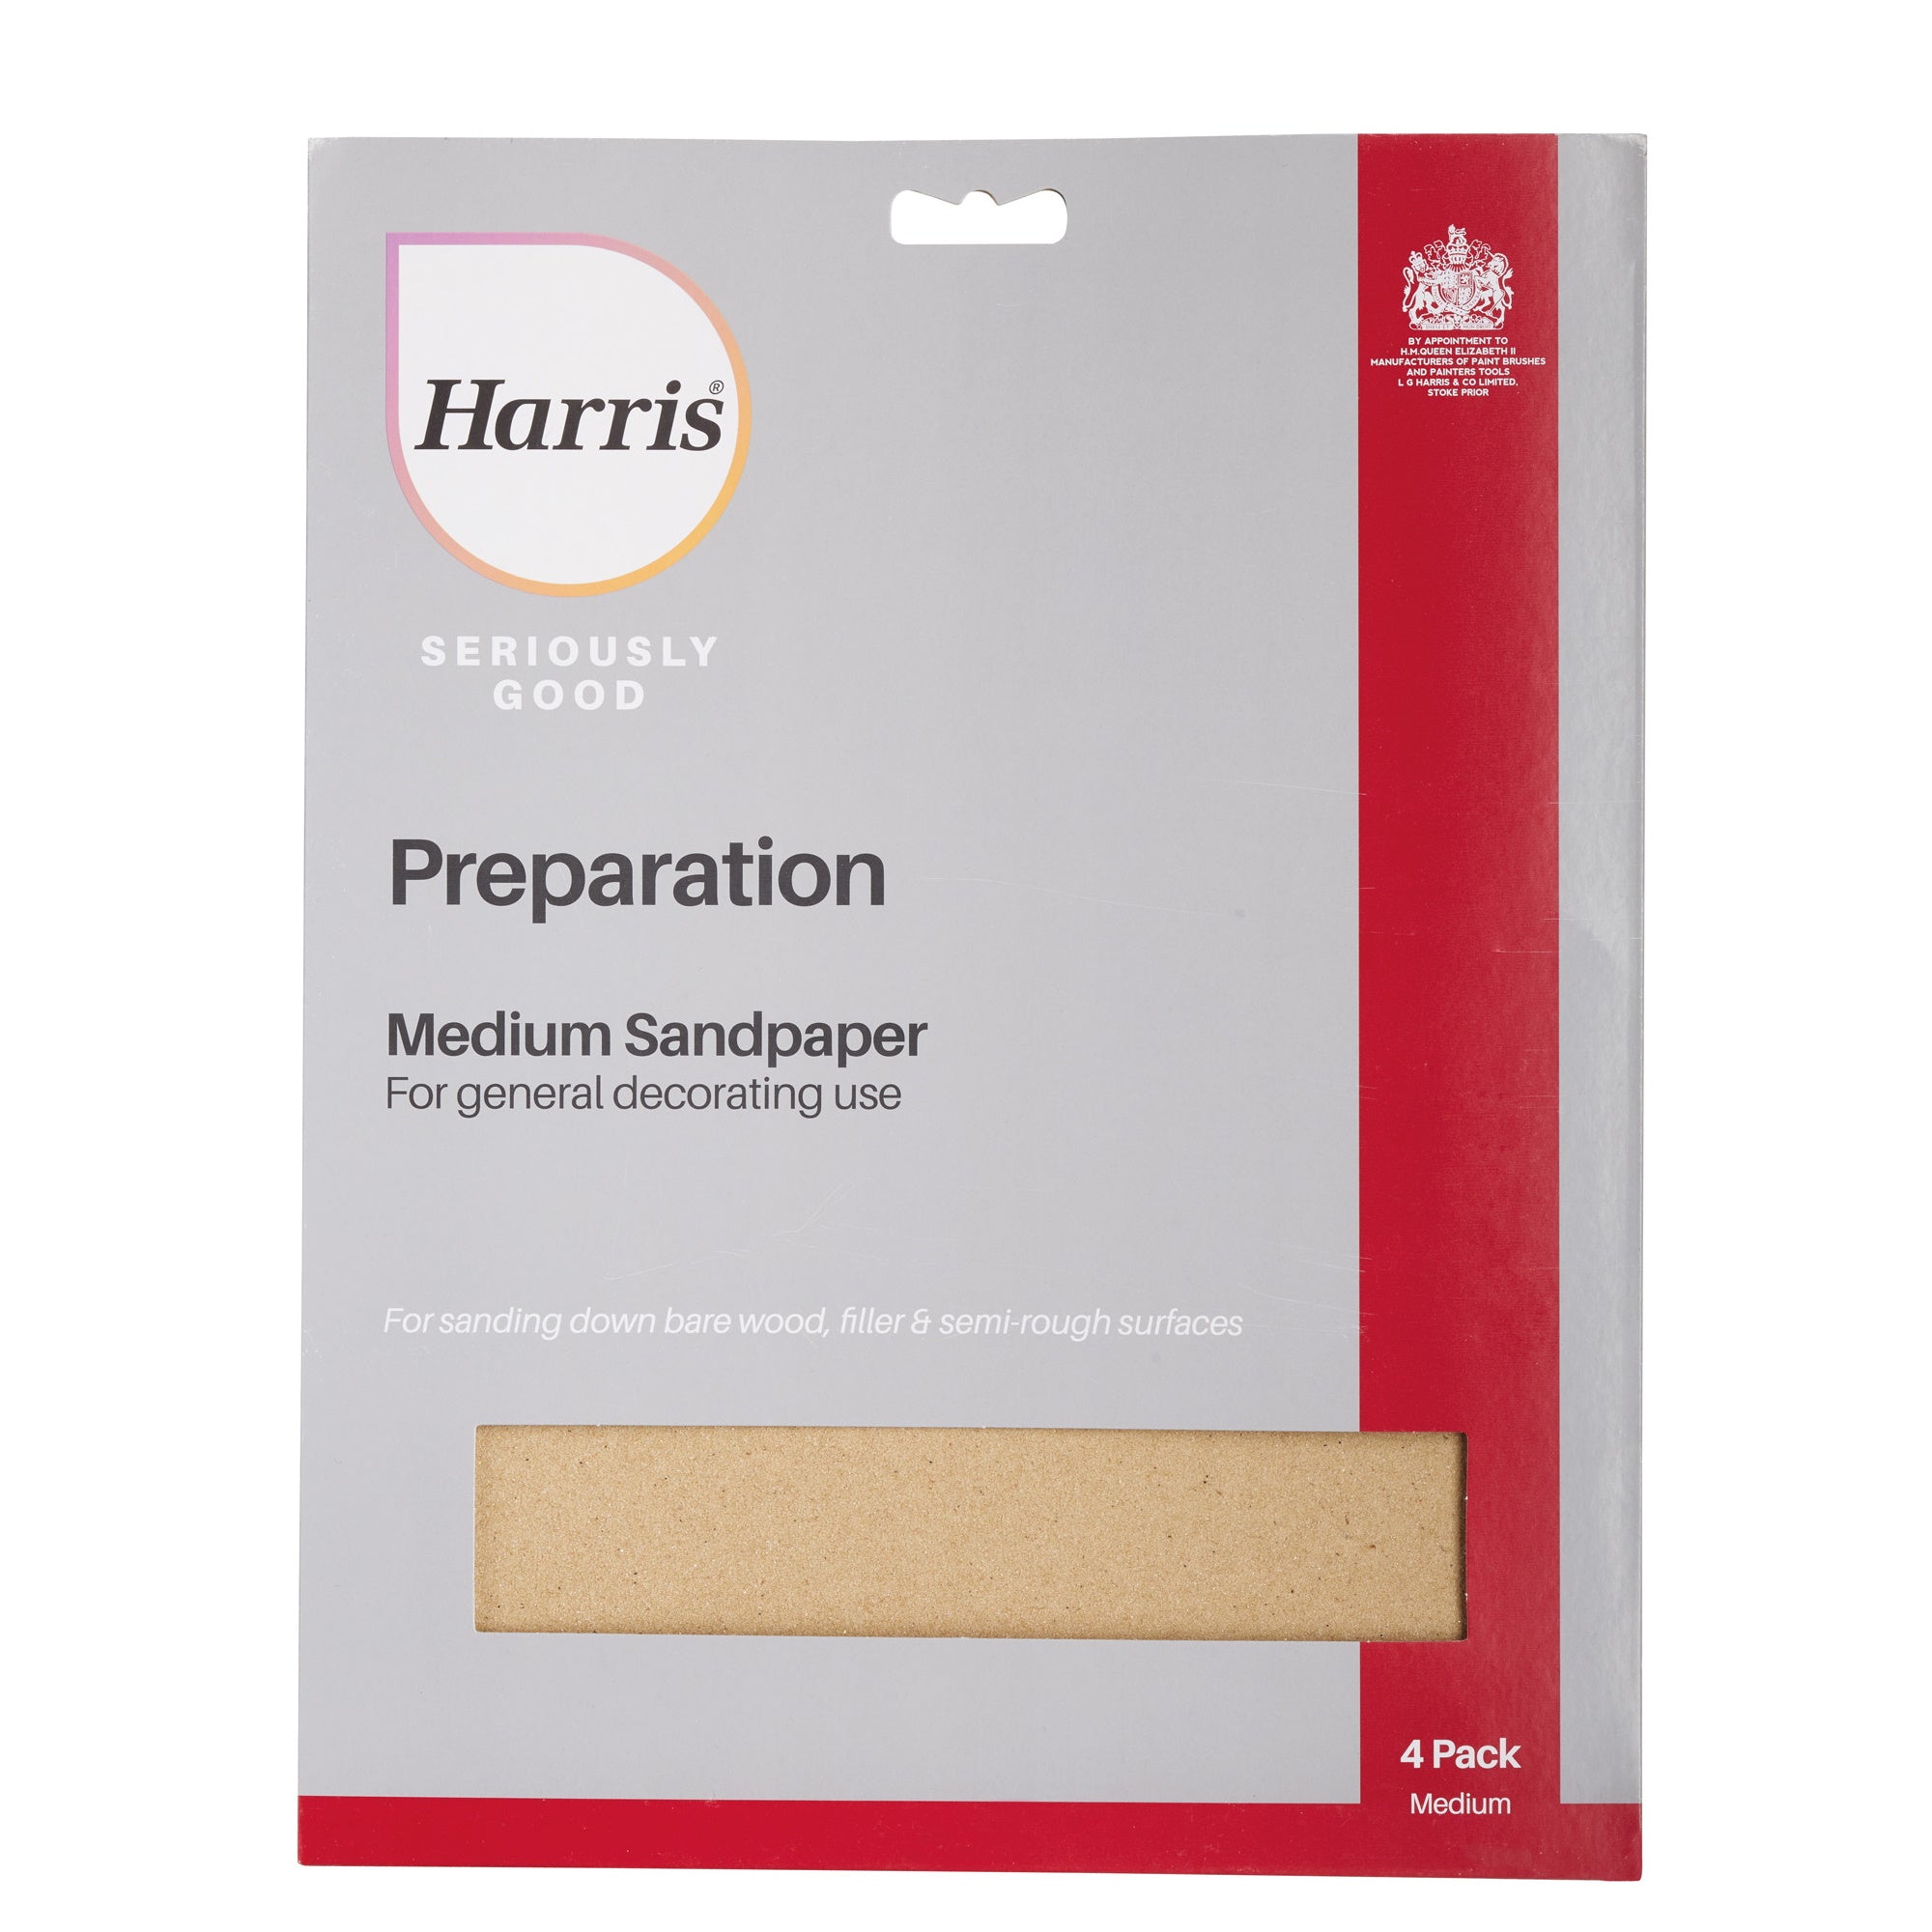 Harris Seriously Good 102064319 Preparation Sandpaper Pack of 4 - Medium - Premium Sanding from HARRIS - Just $1.2! Shop now at W Hurst & Son (IW) Ltd